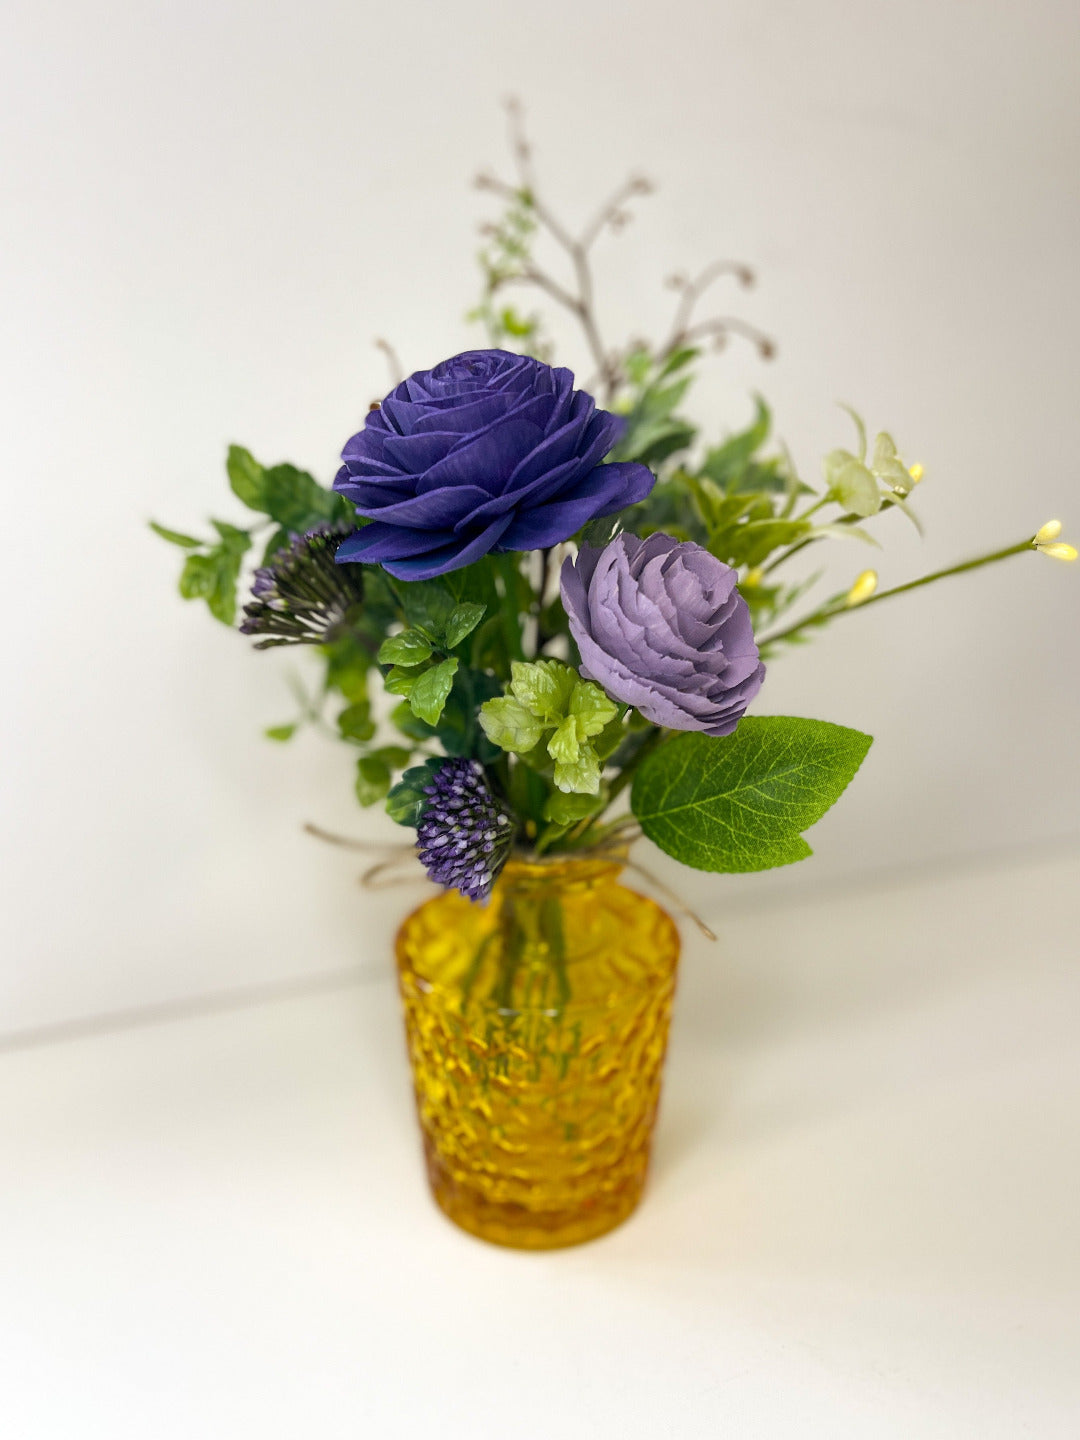 Dark purple & light purple wooden flower bouquet with greenery placed in yellow bud vase. 